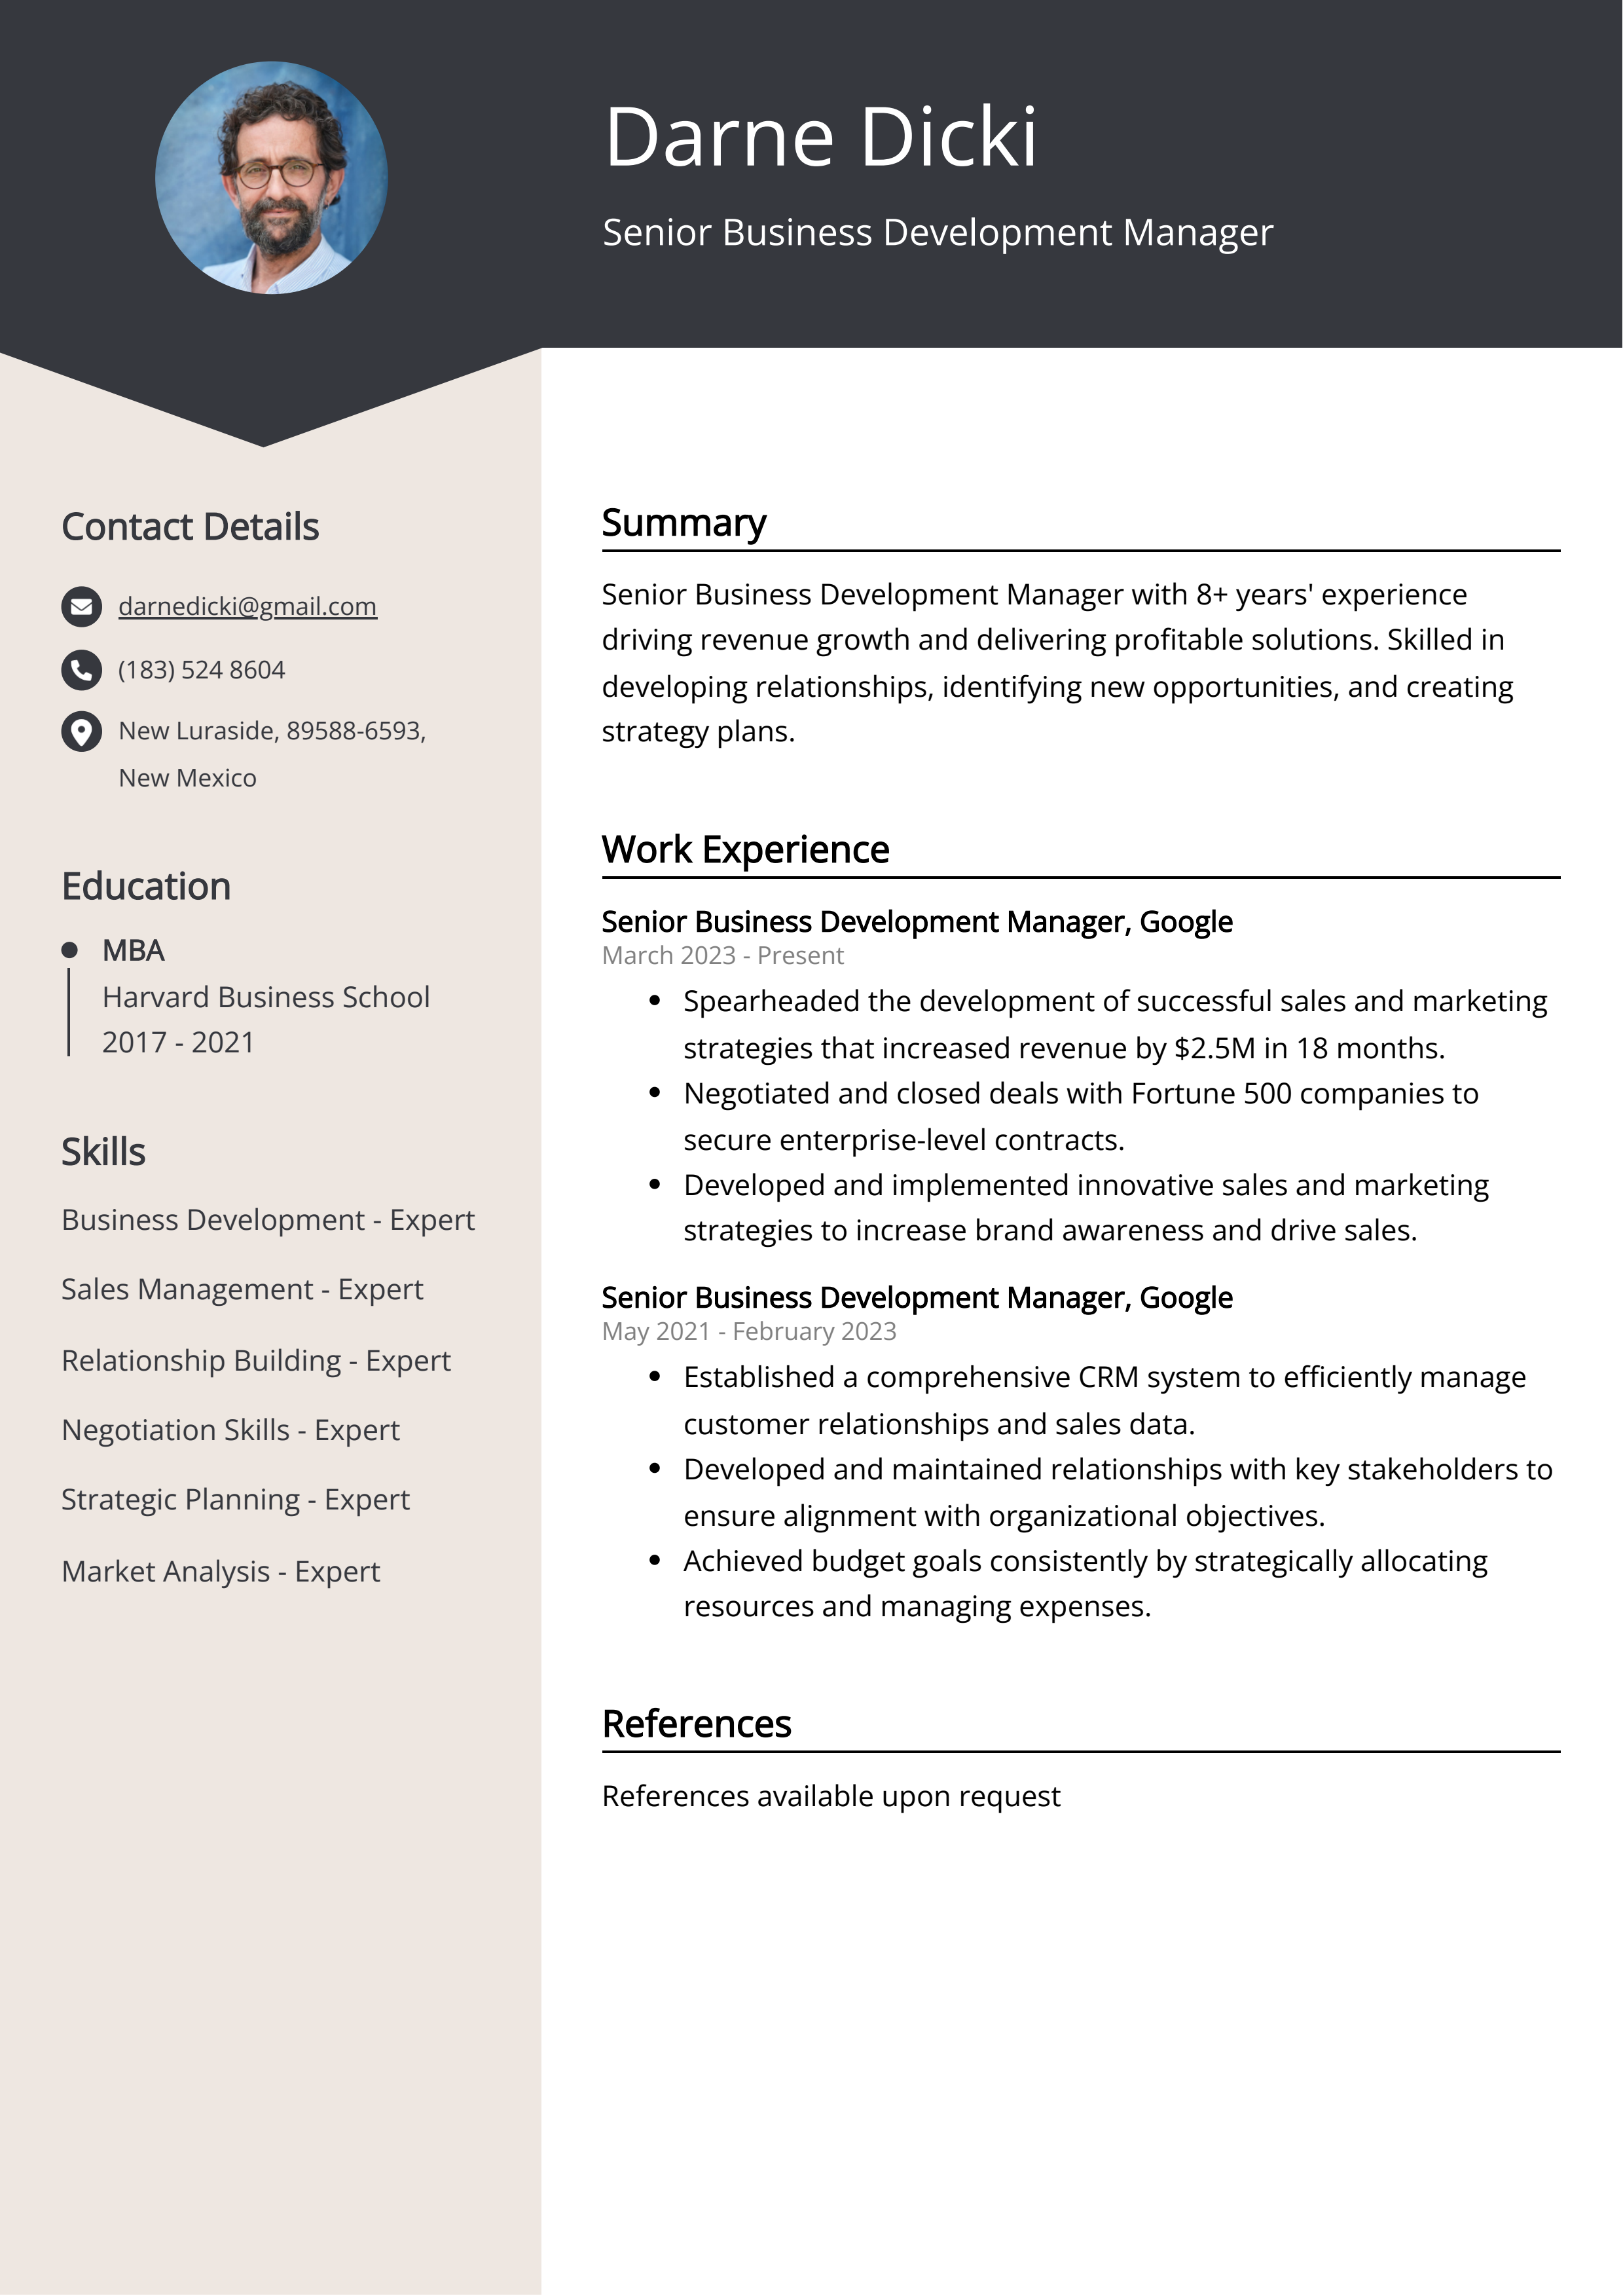 Senior Business Development Manager CV Example